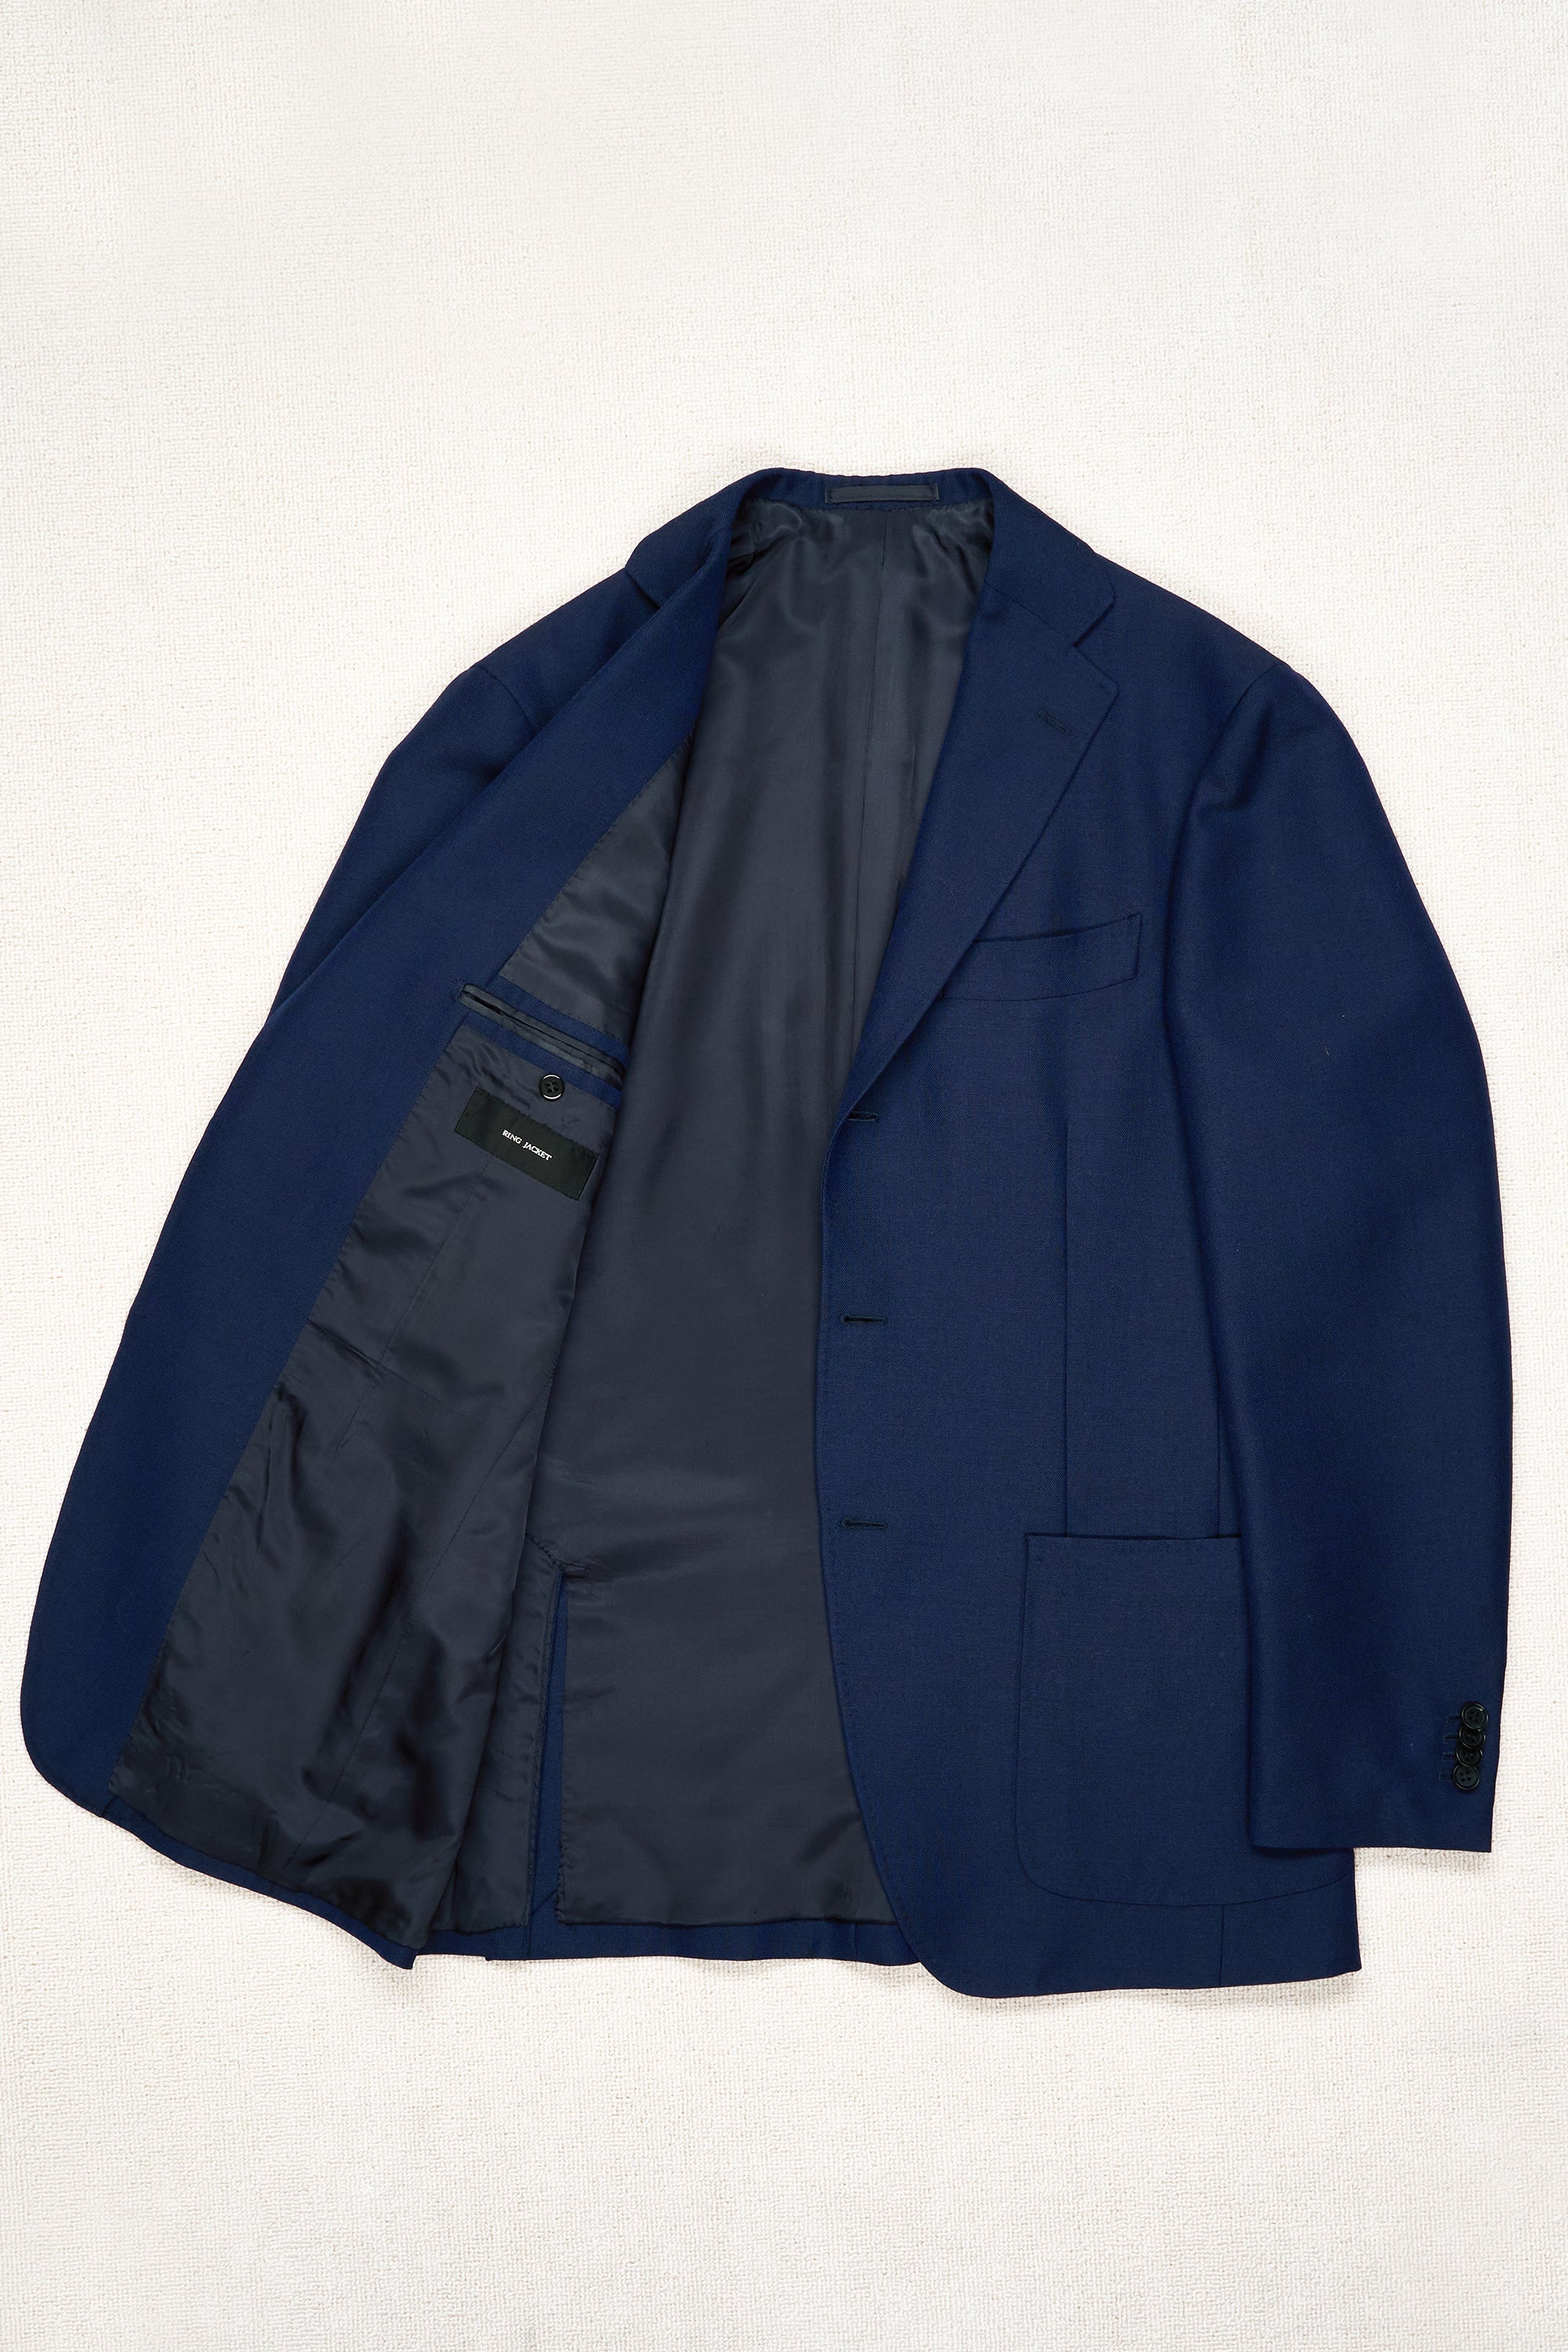 Ring Jacket 184 Navy Wool/Mohair 3-Ply Sport Coat